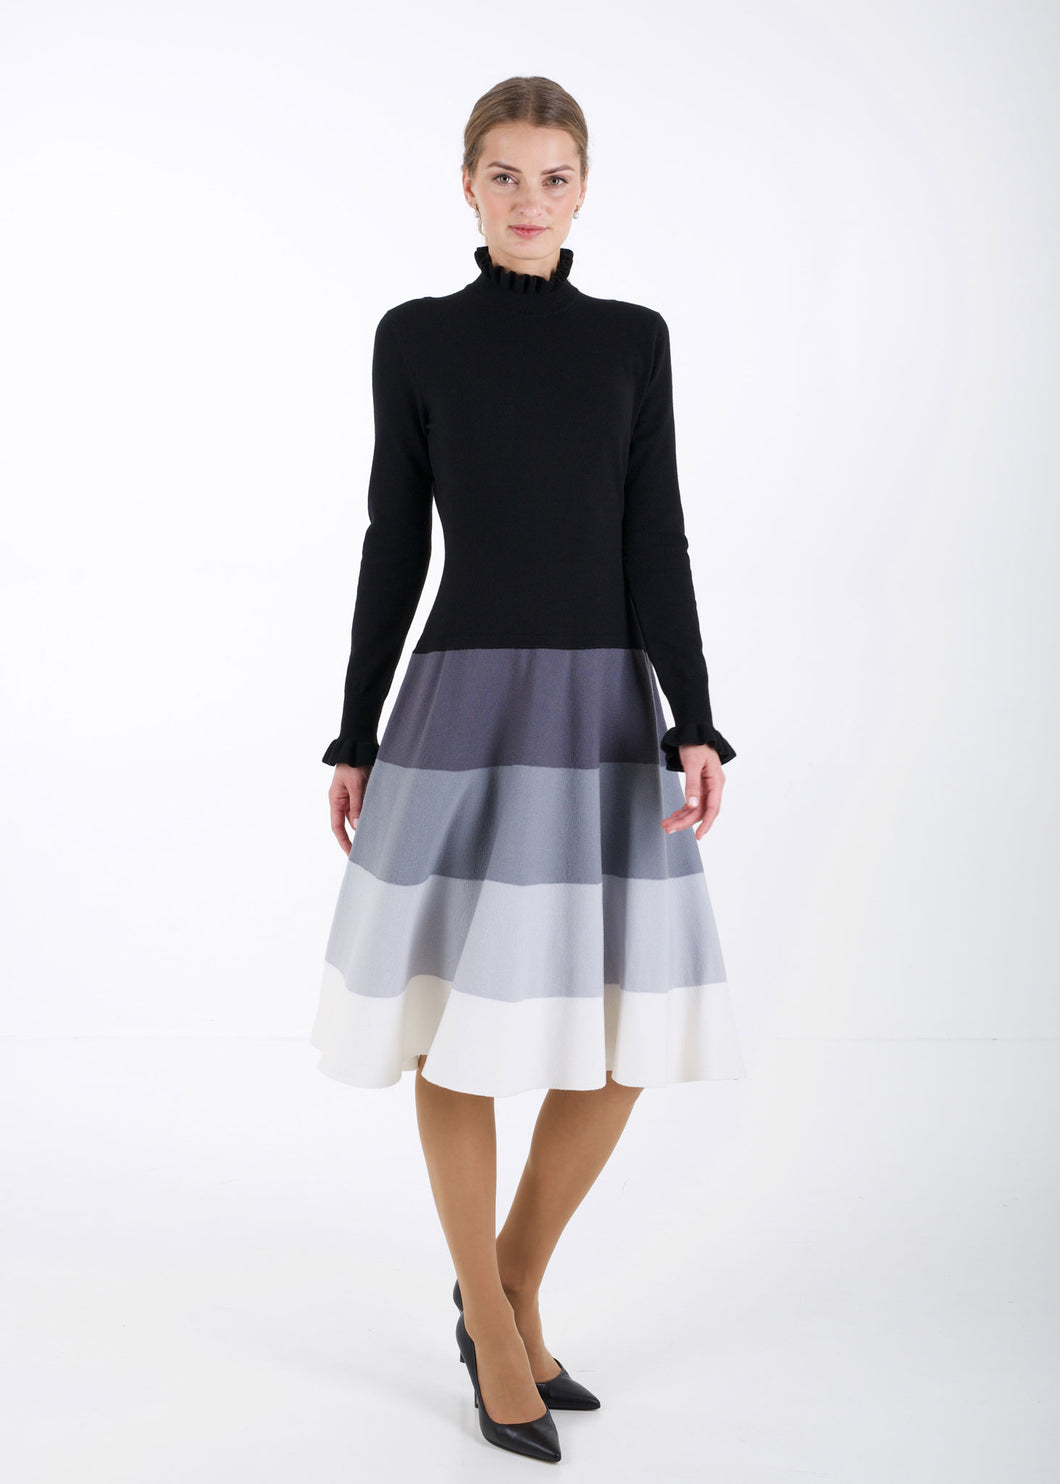 Gradient knit dress, black to white